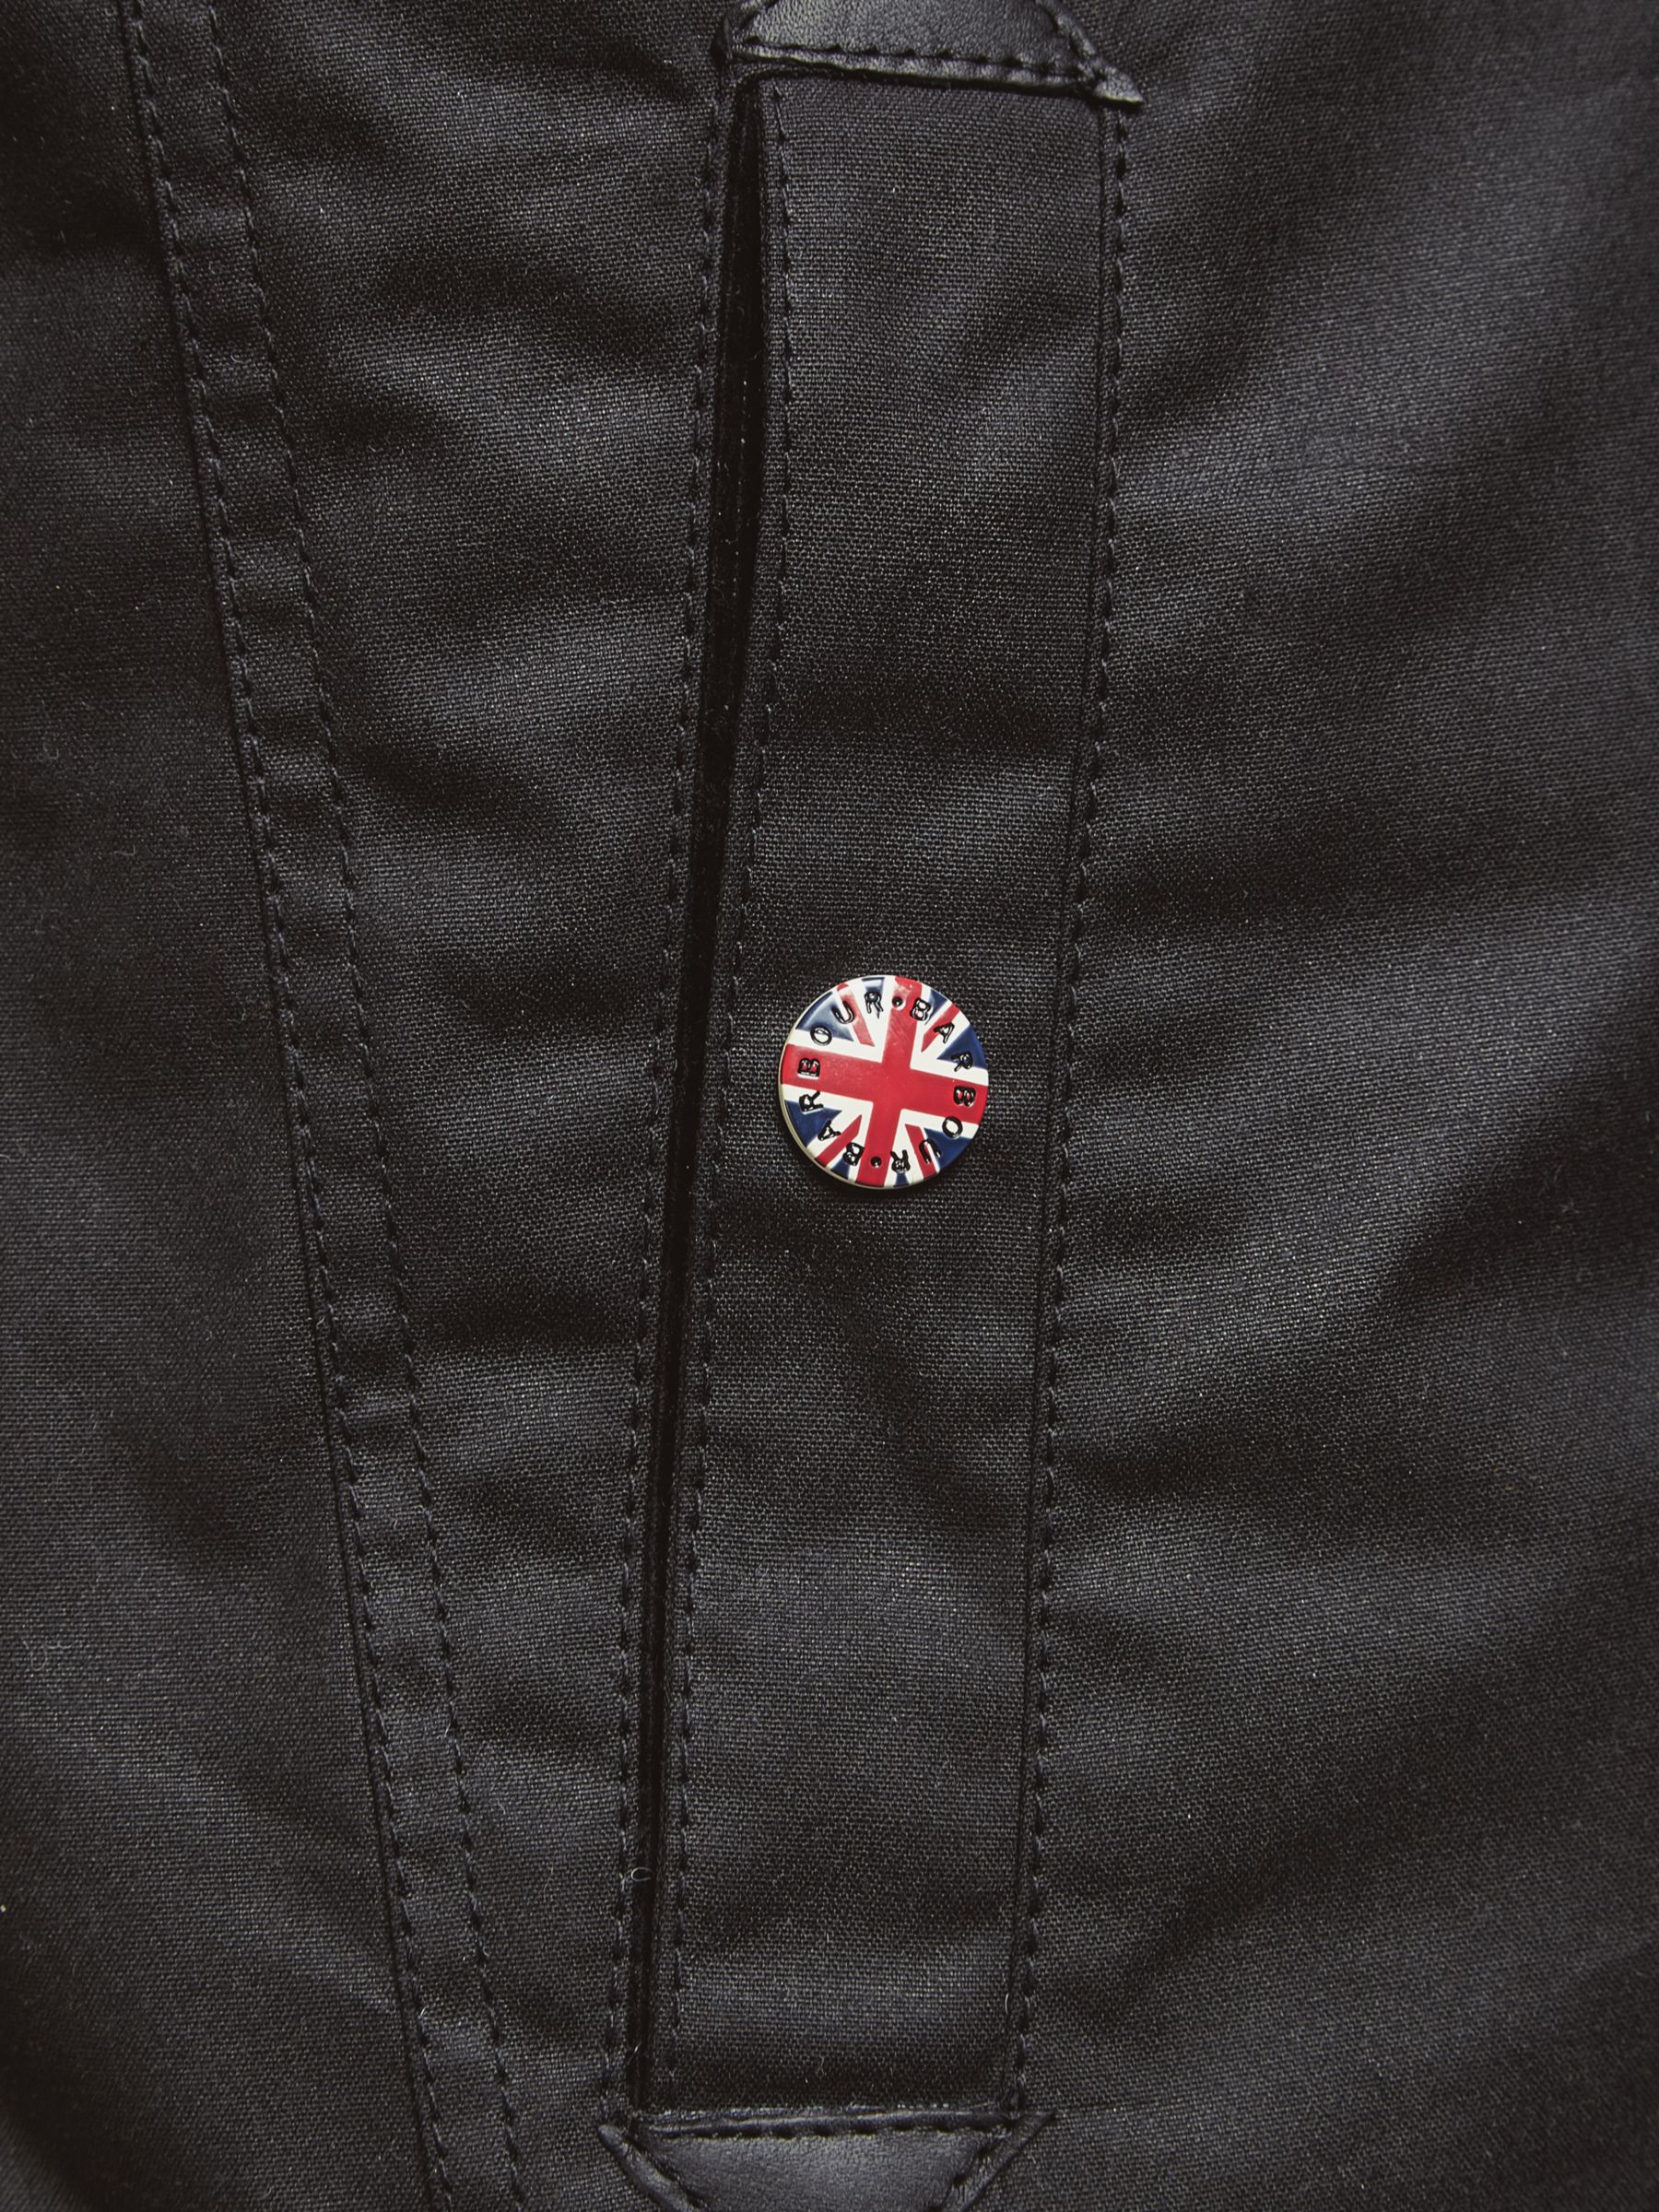 barbour international legion wax jacket